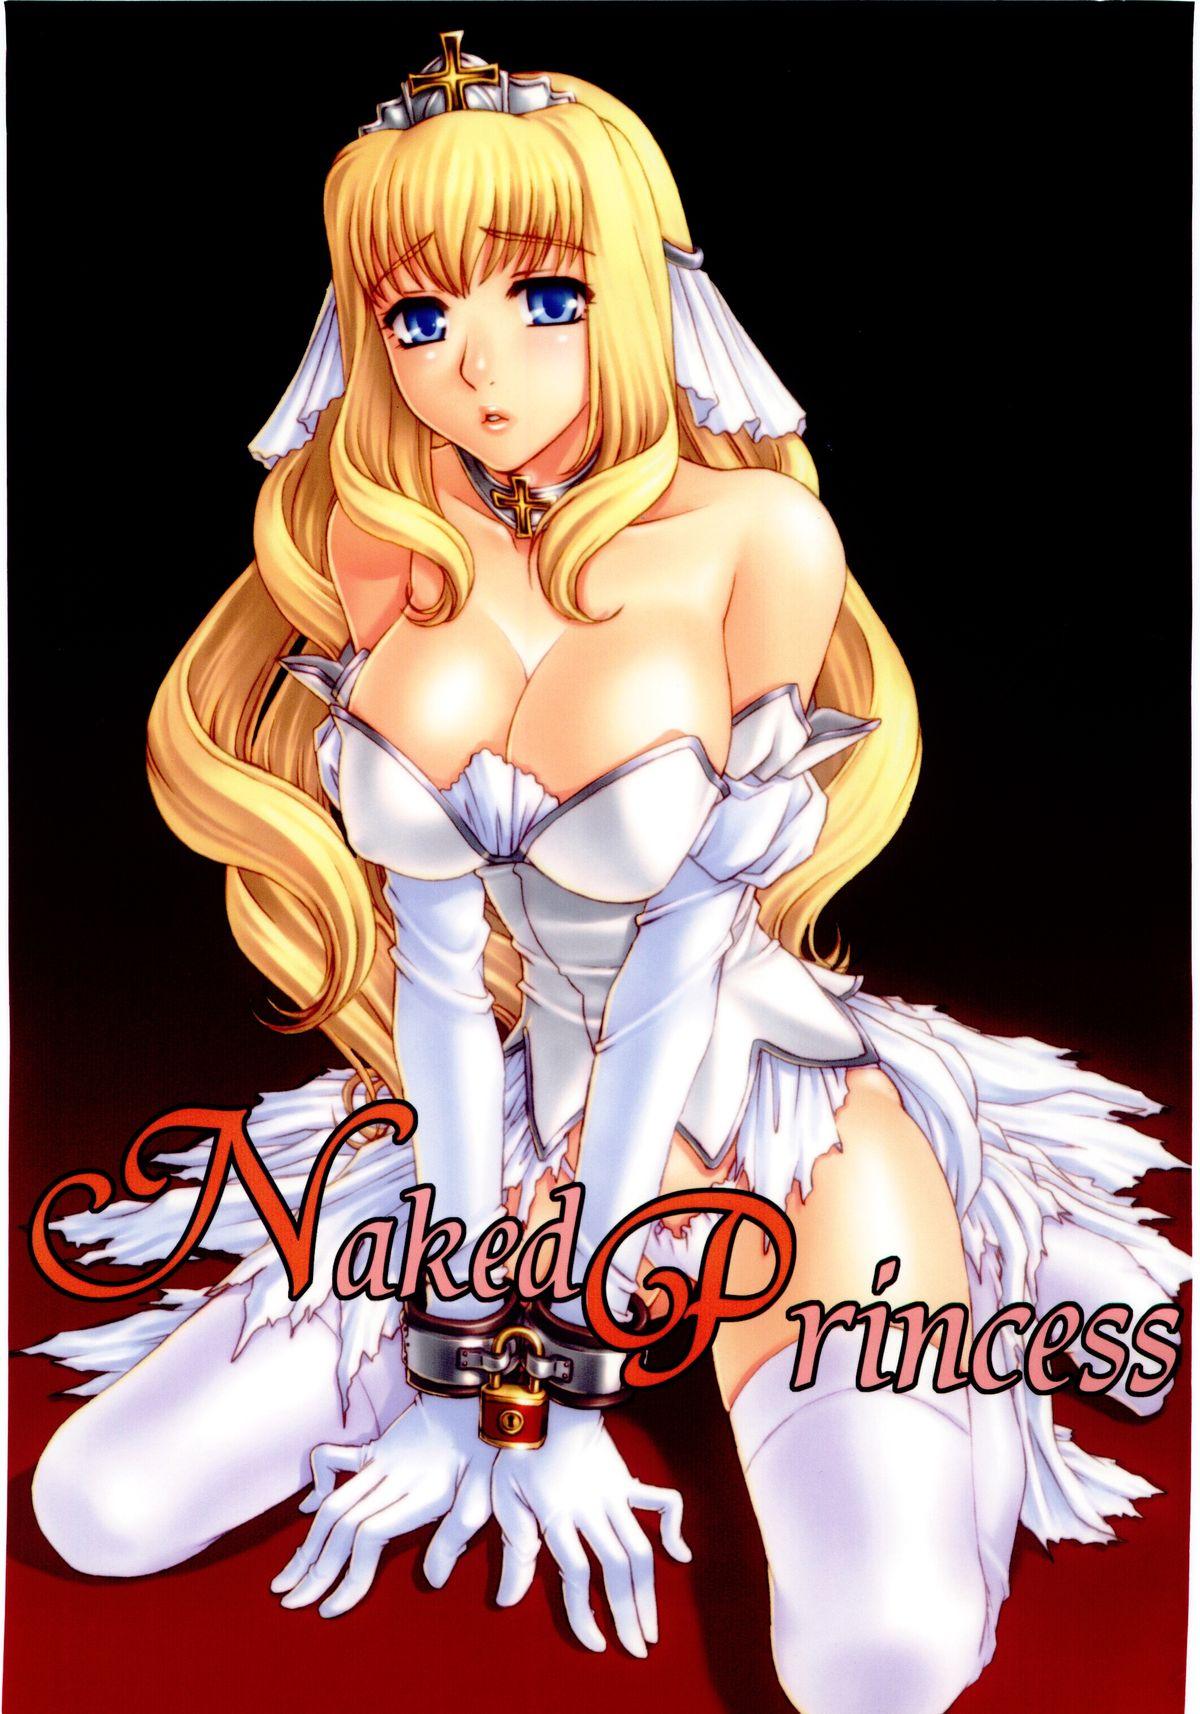 Naked Princess 0